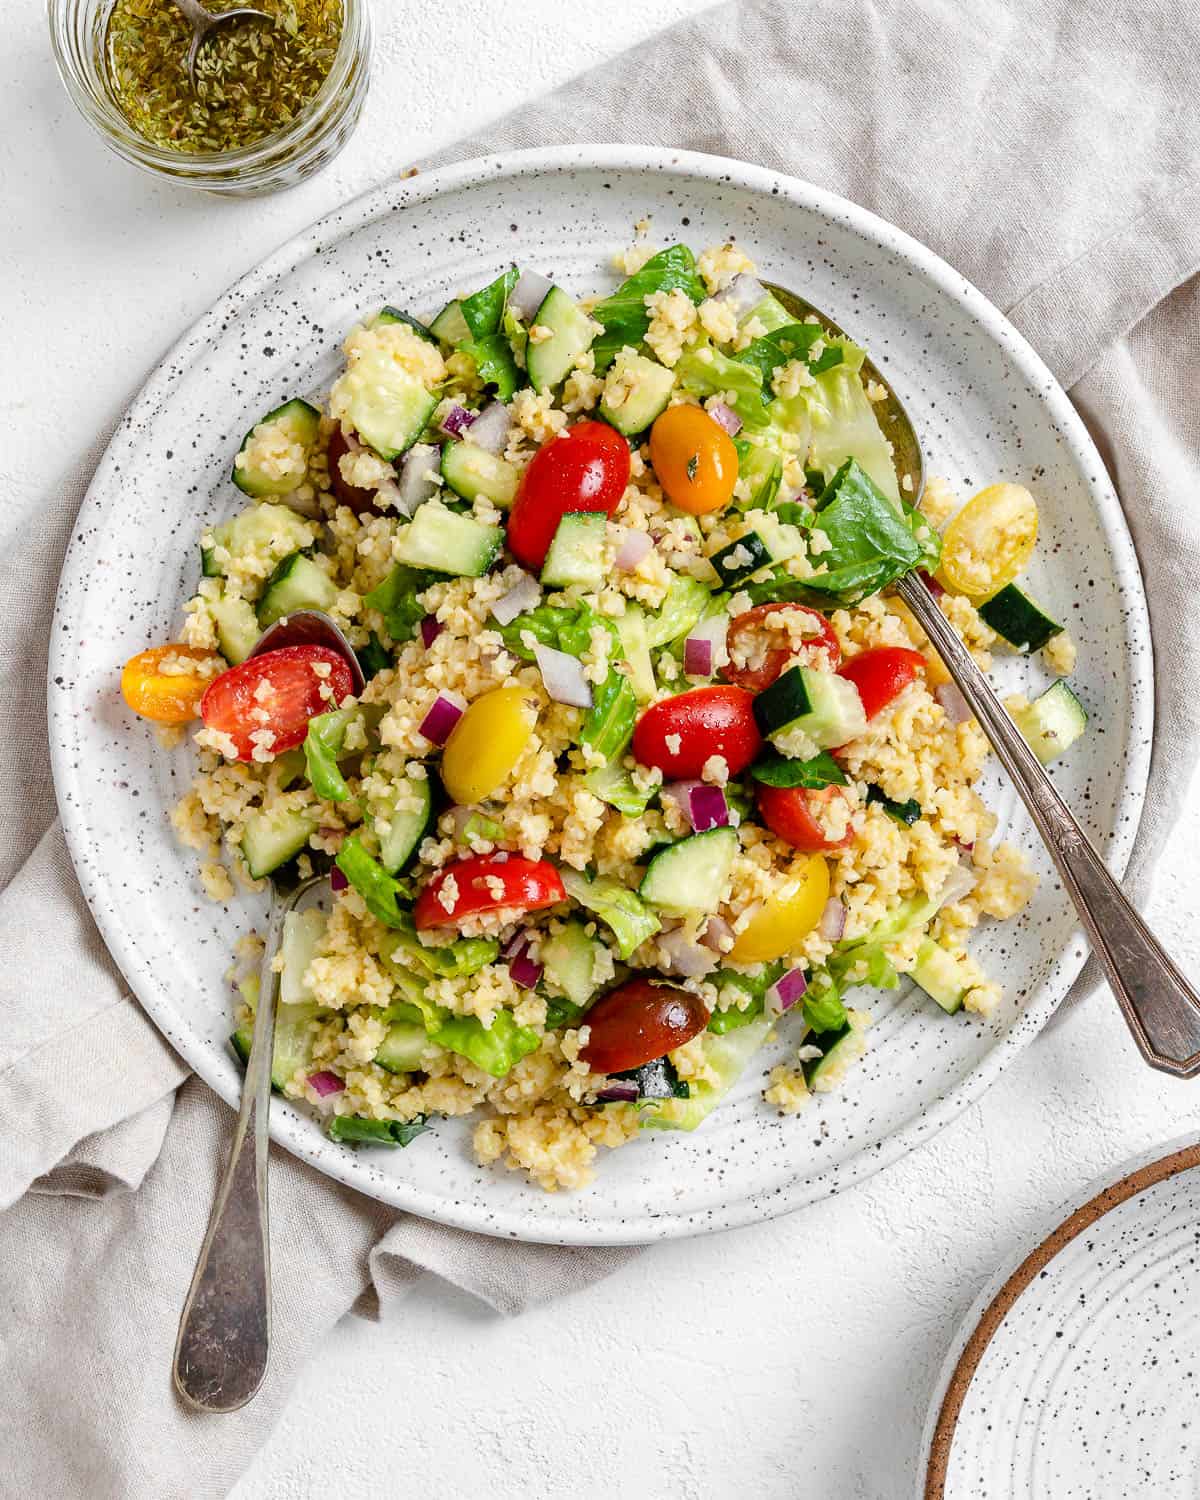 completed Vegan Greek Millet Salad on a white plate against a light background